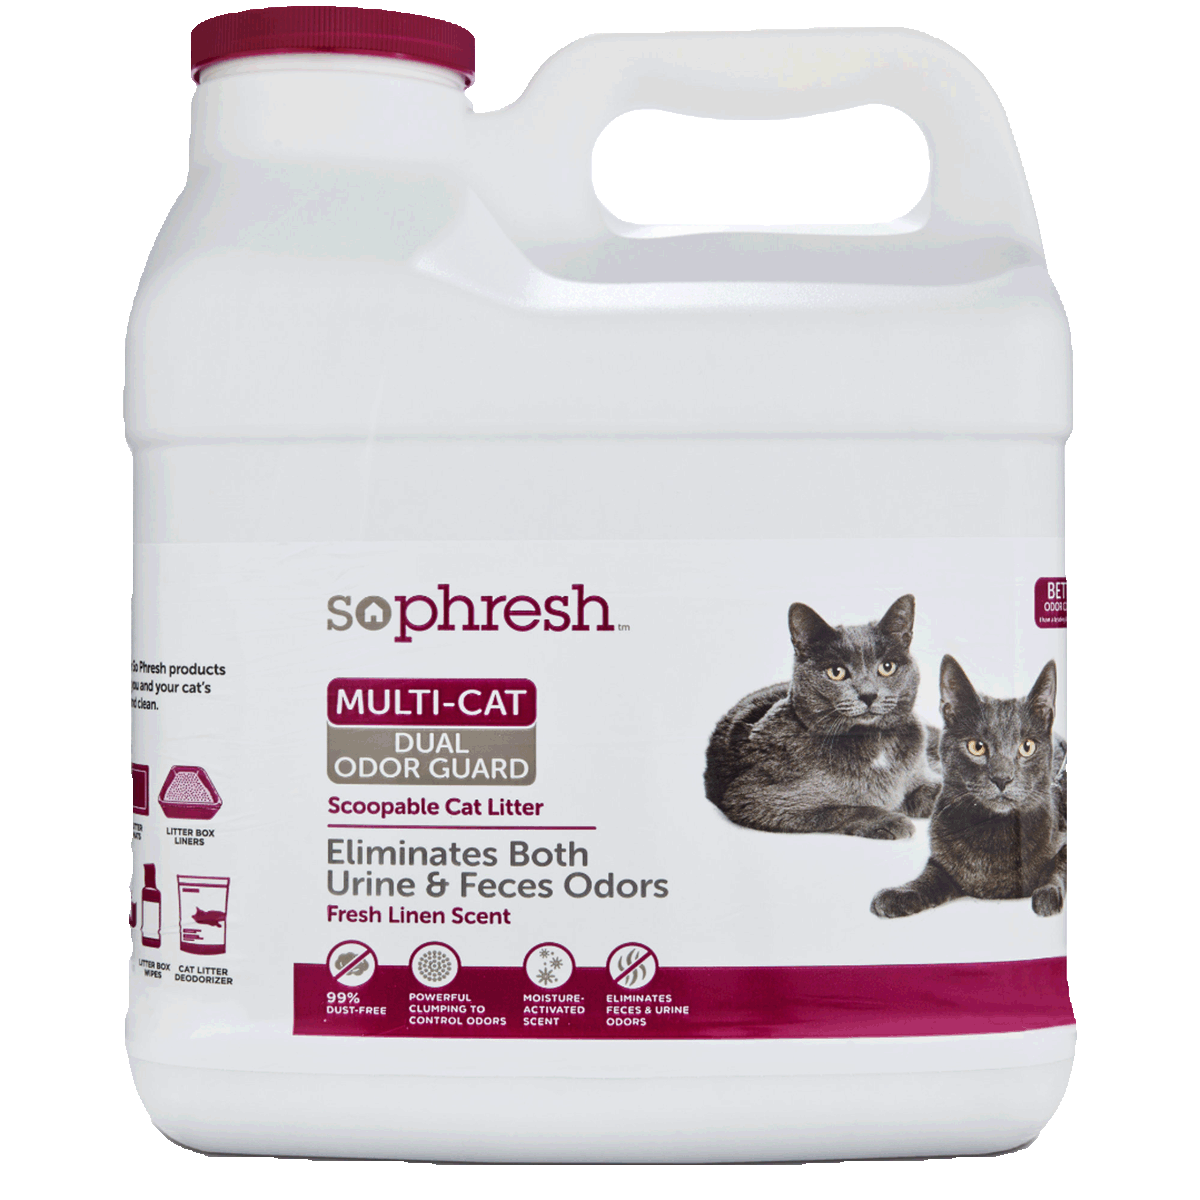 Sophresh Multi-Cat Dual Odor Guard Arena Aglutinante con Esencia para Hogares Multi-Gato, 7.2 kg